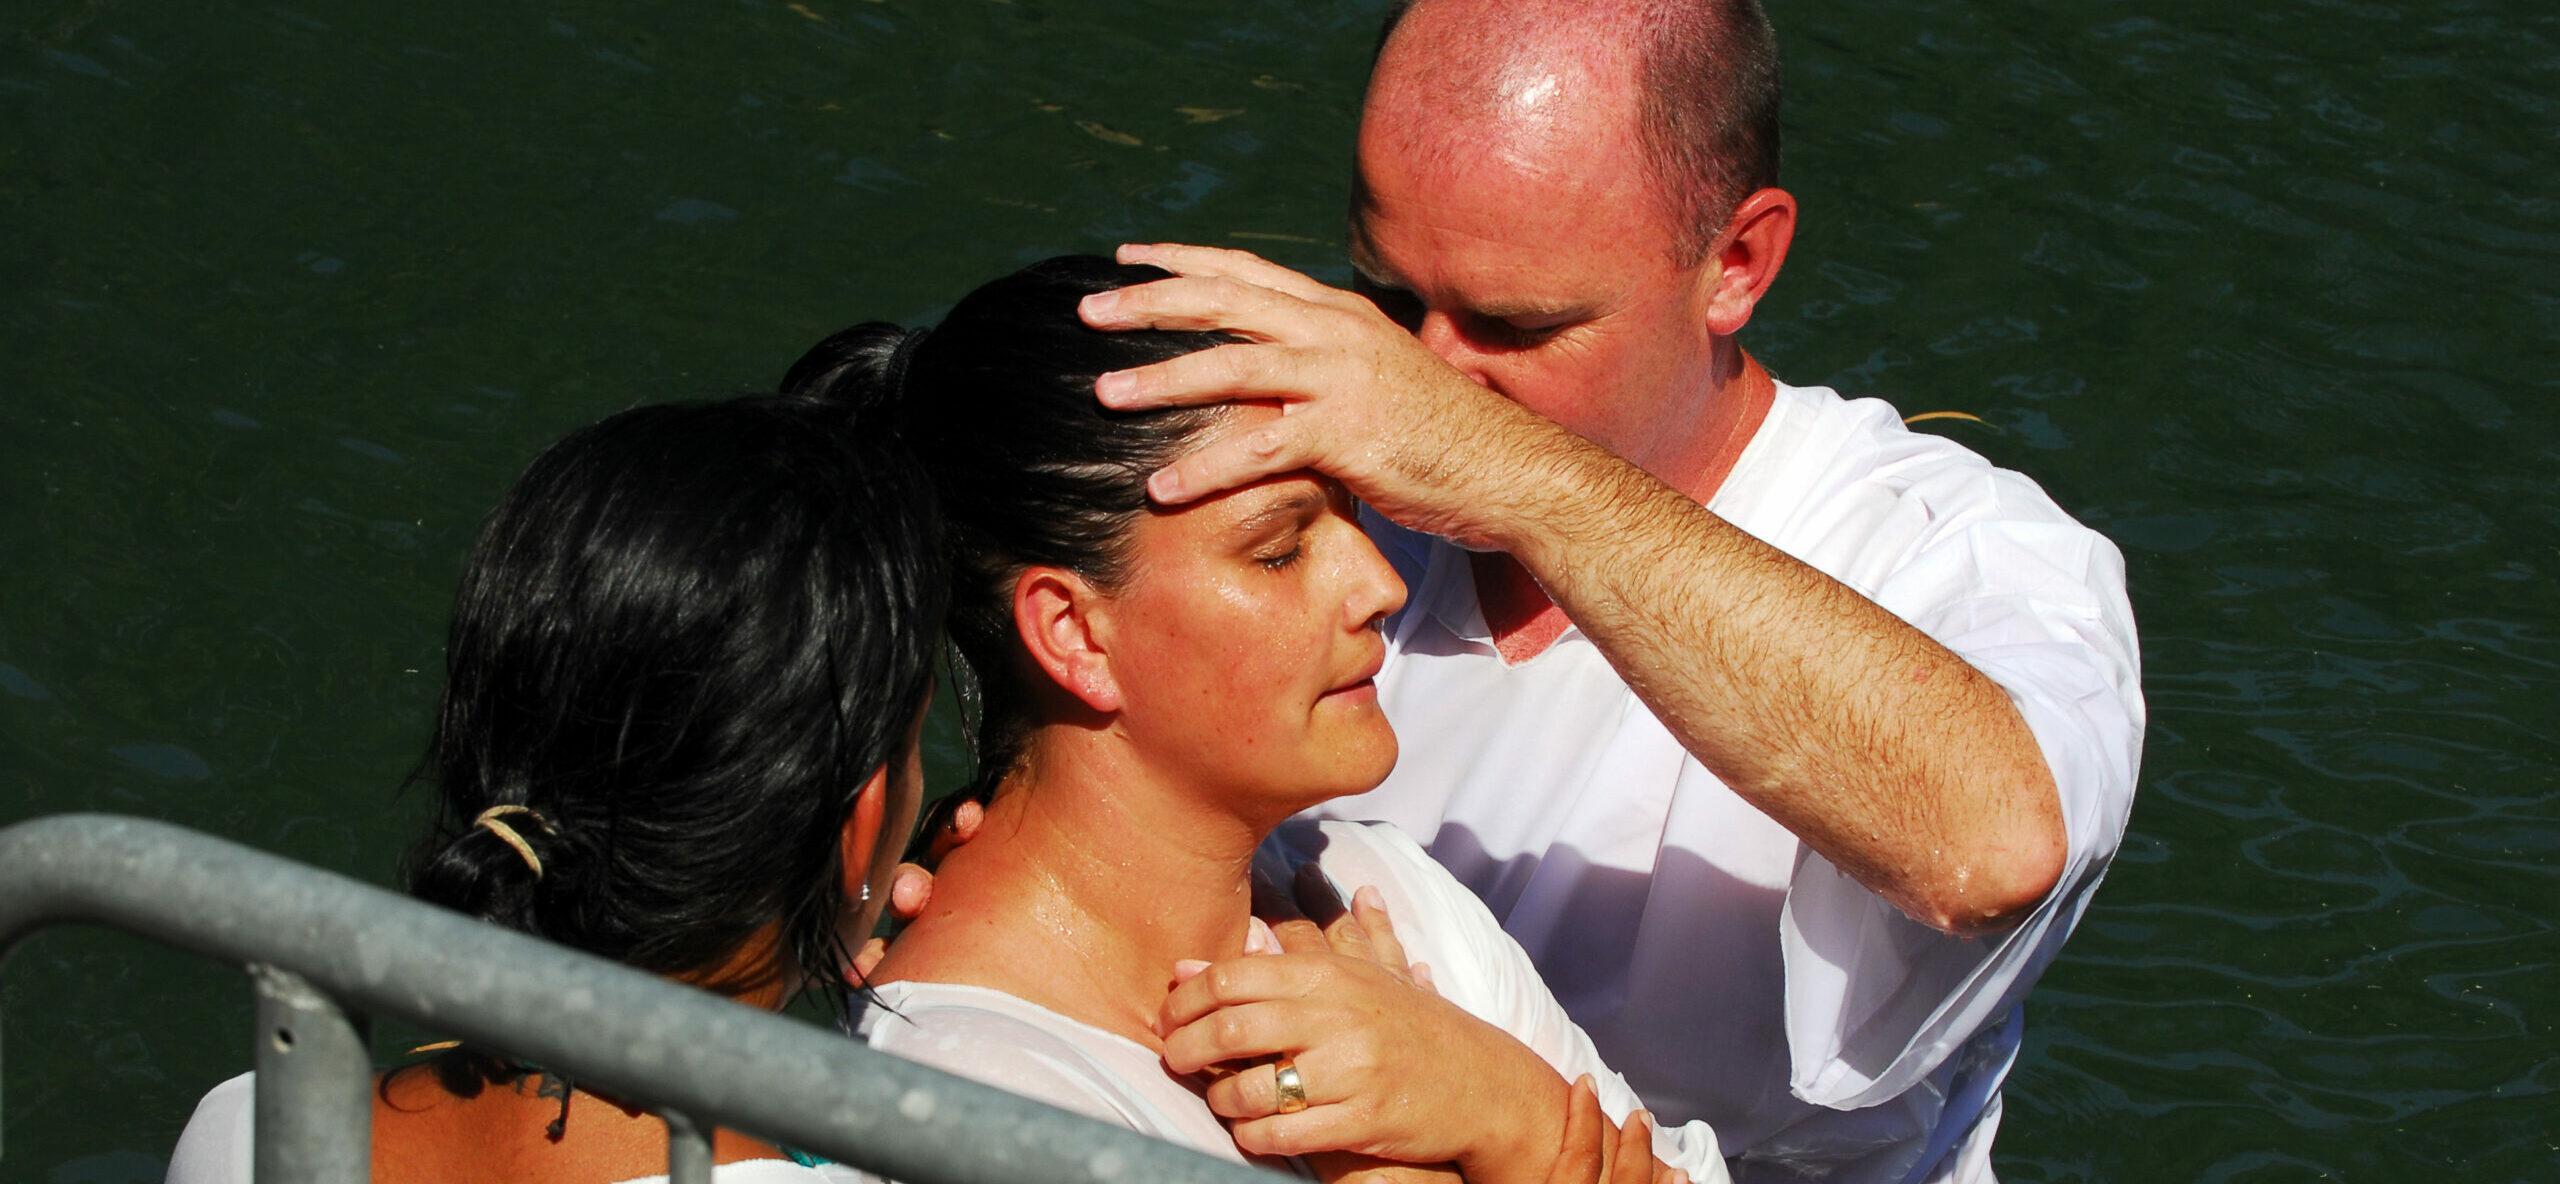 Baptism ceremony at the Jordan River